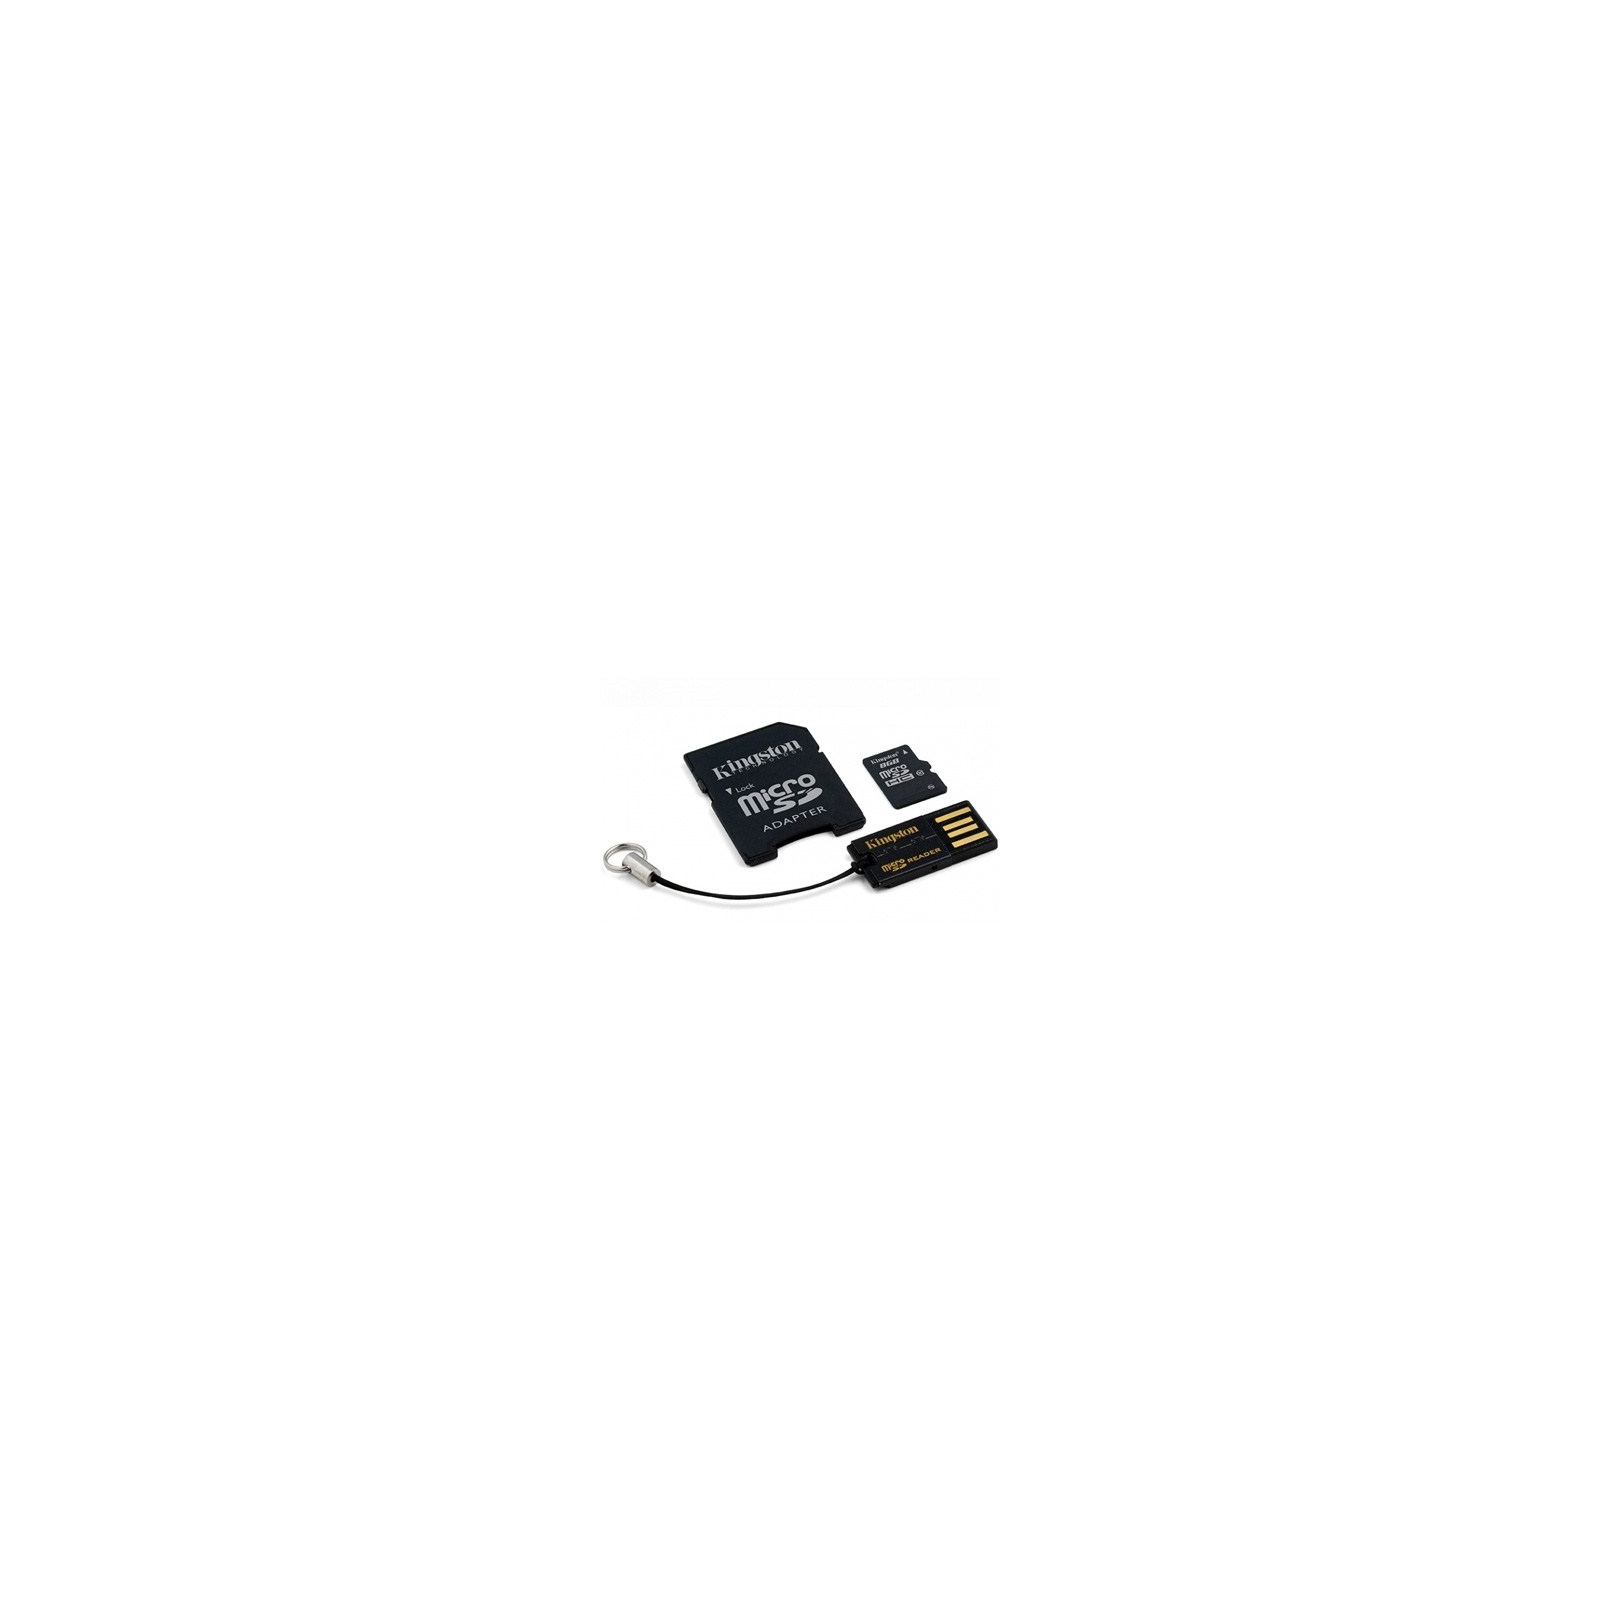 Карта памяти Kingston 8Gb microSDHC class 10 Gen 2 + SD-adapter + USB-reader (MBLY10G2/8GB)